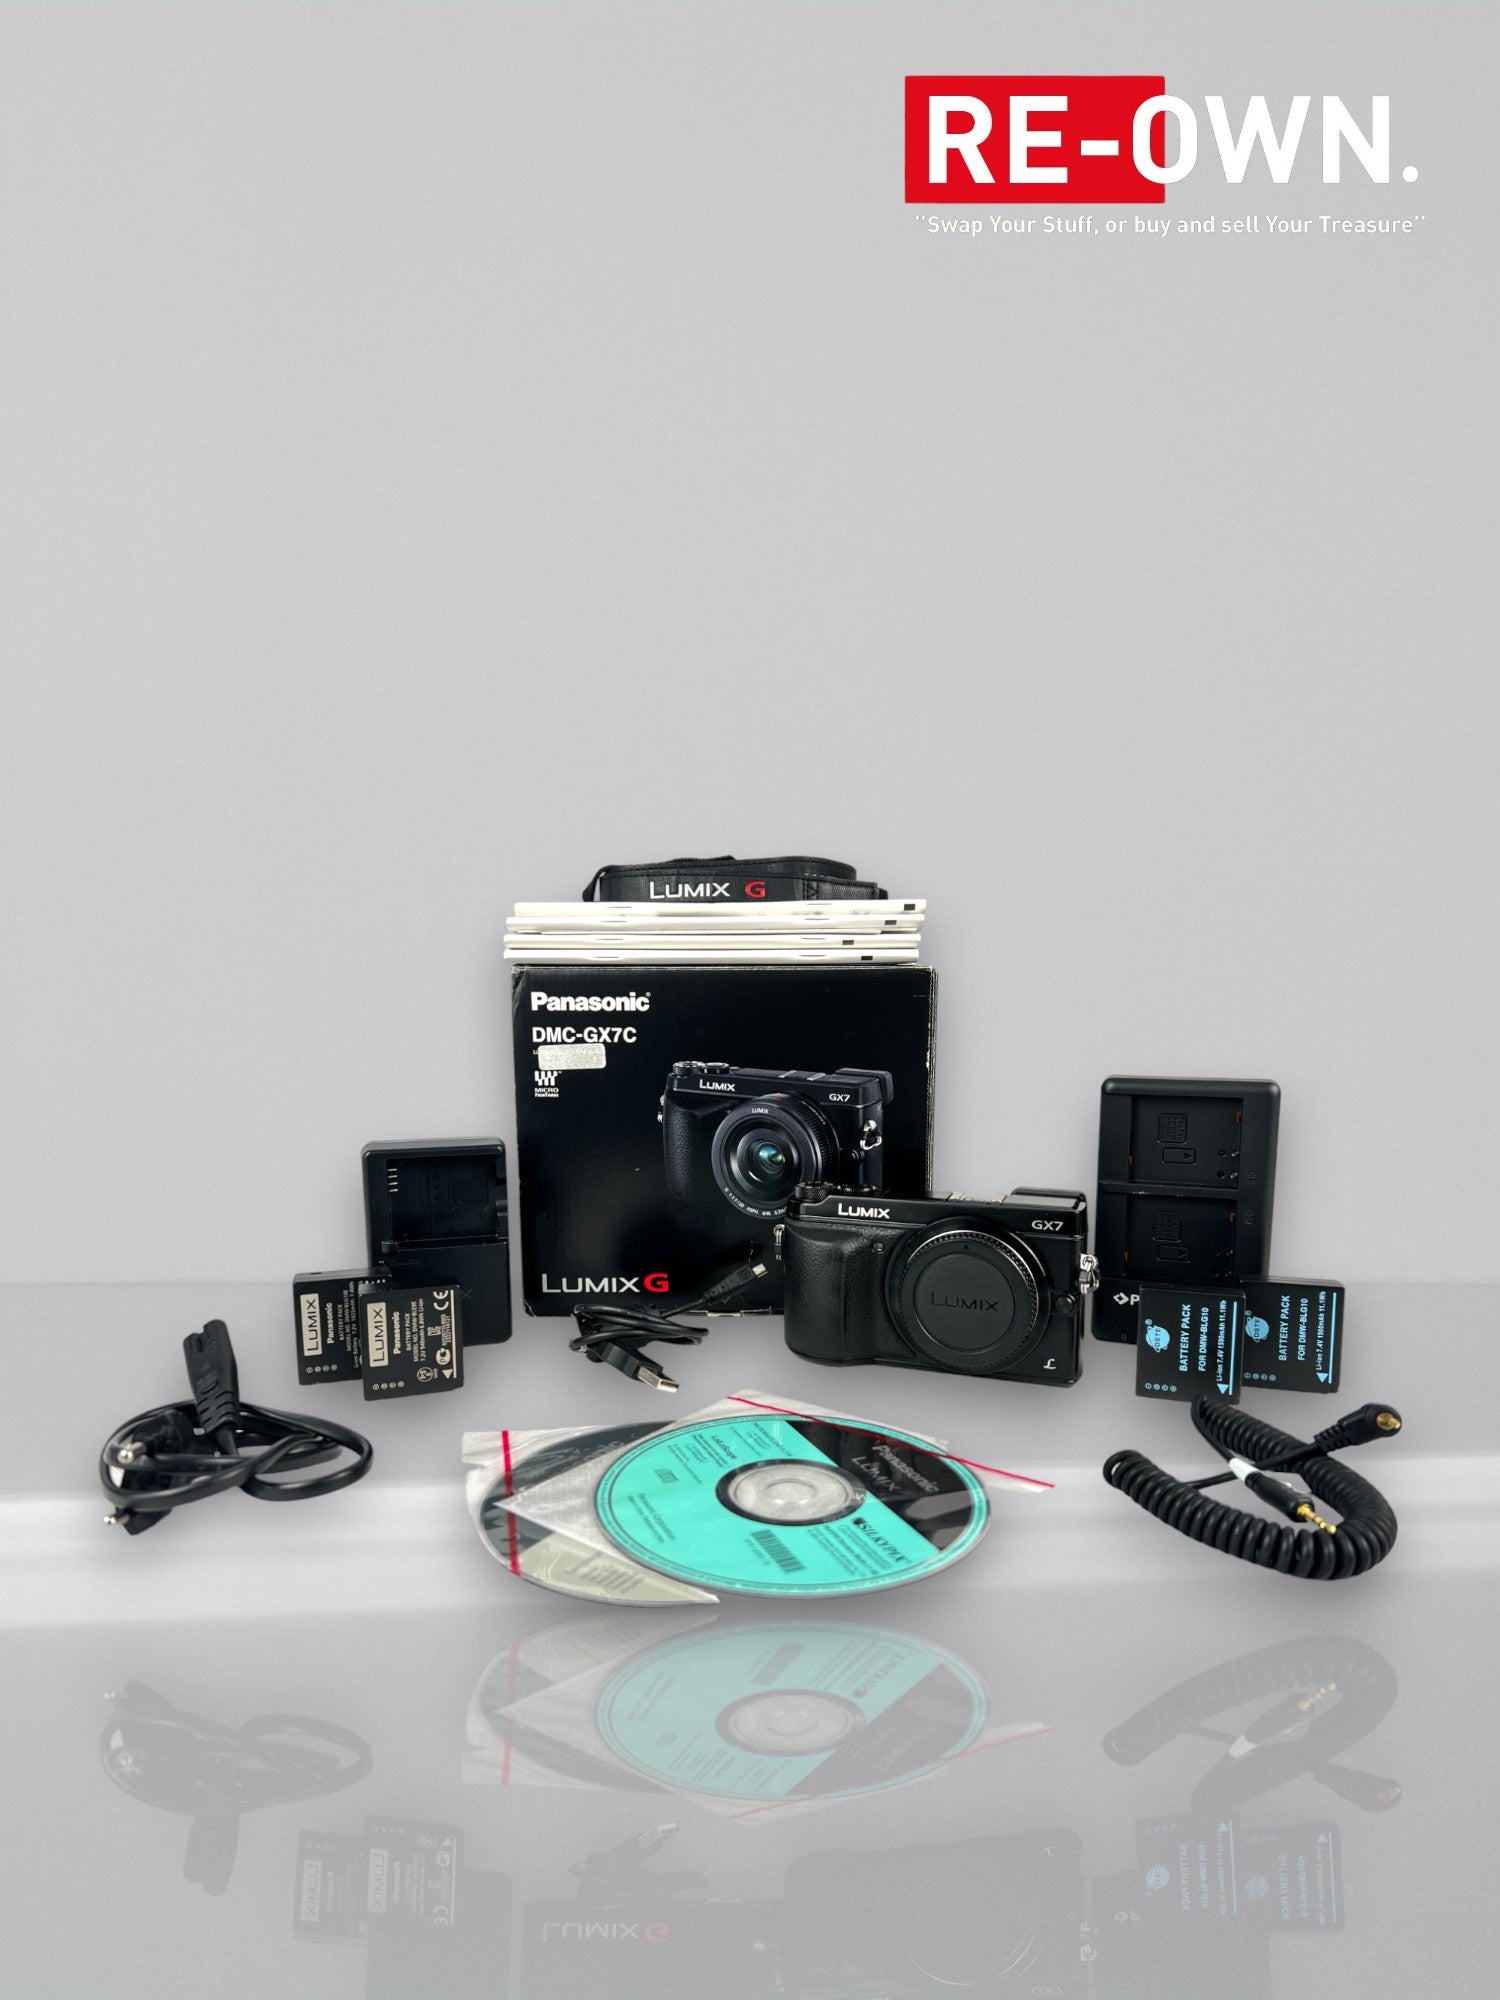 Panasonic Lumix DMC-GX7C compact camera